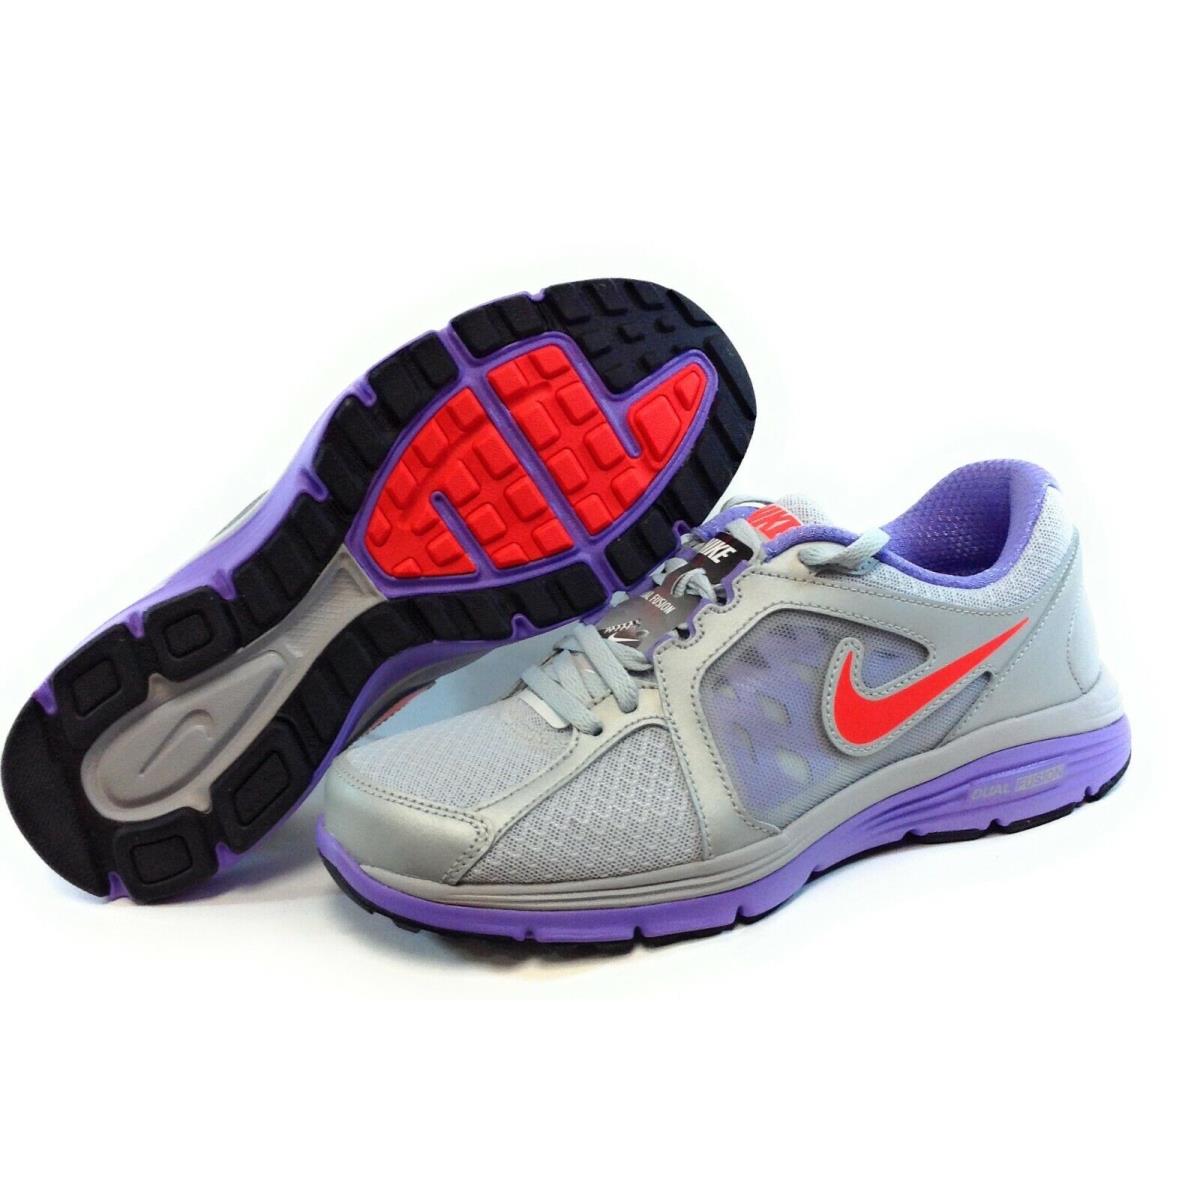 Womens Nike Dual Fusion Run 525752 007 Platinum Purple 2012 DS Sneakers Shoes